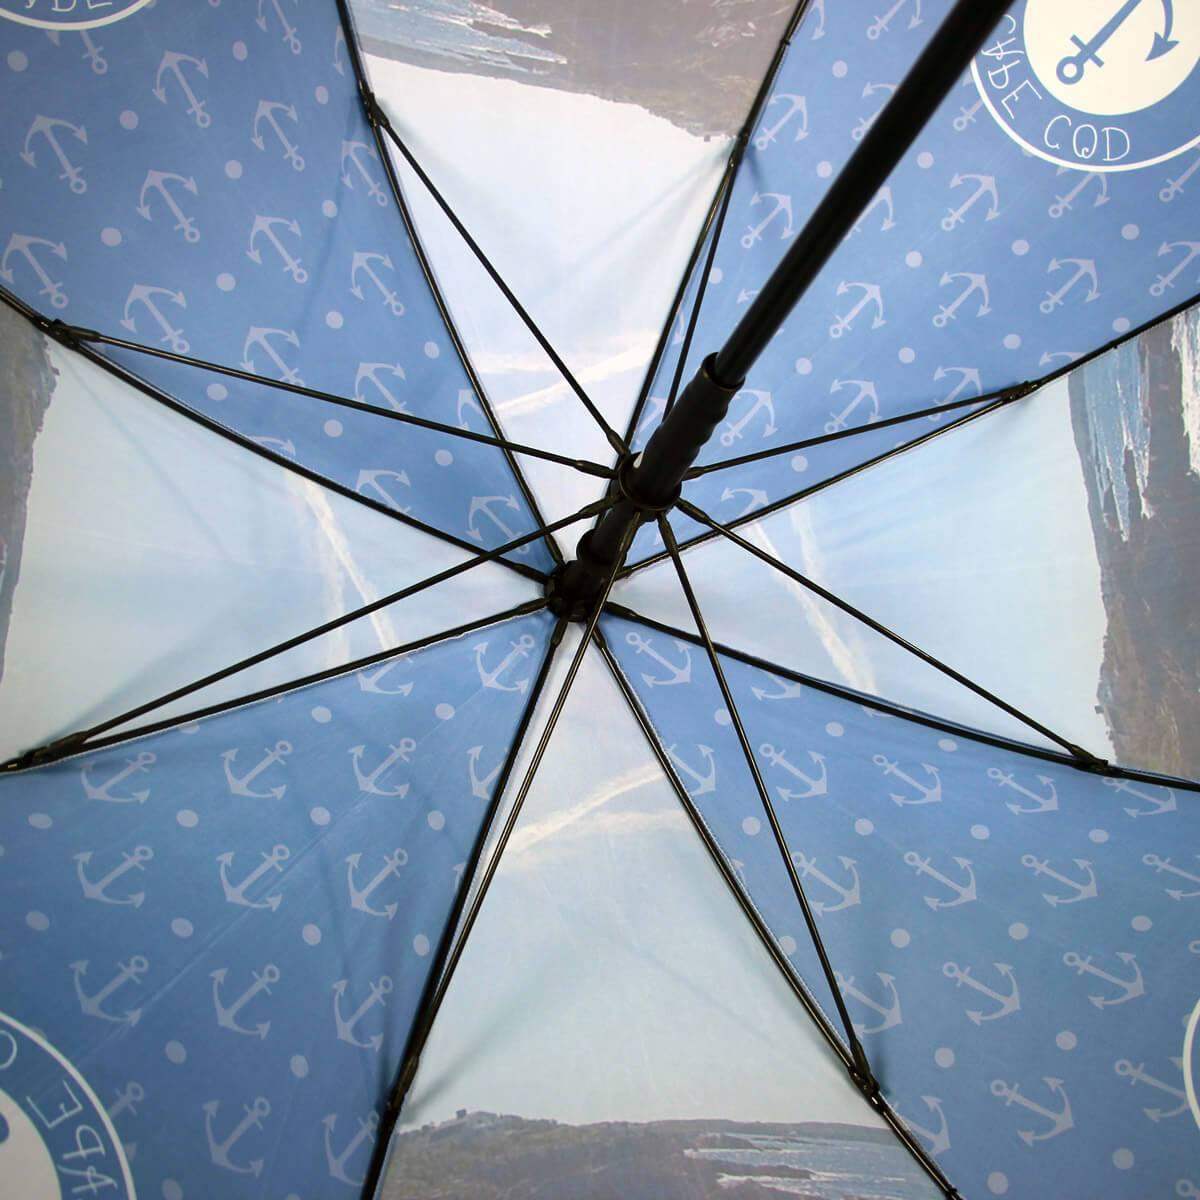 ProBrella Fibreglass Soft Feel Umbrella - The Luxury Promotional Gifts Company Limited